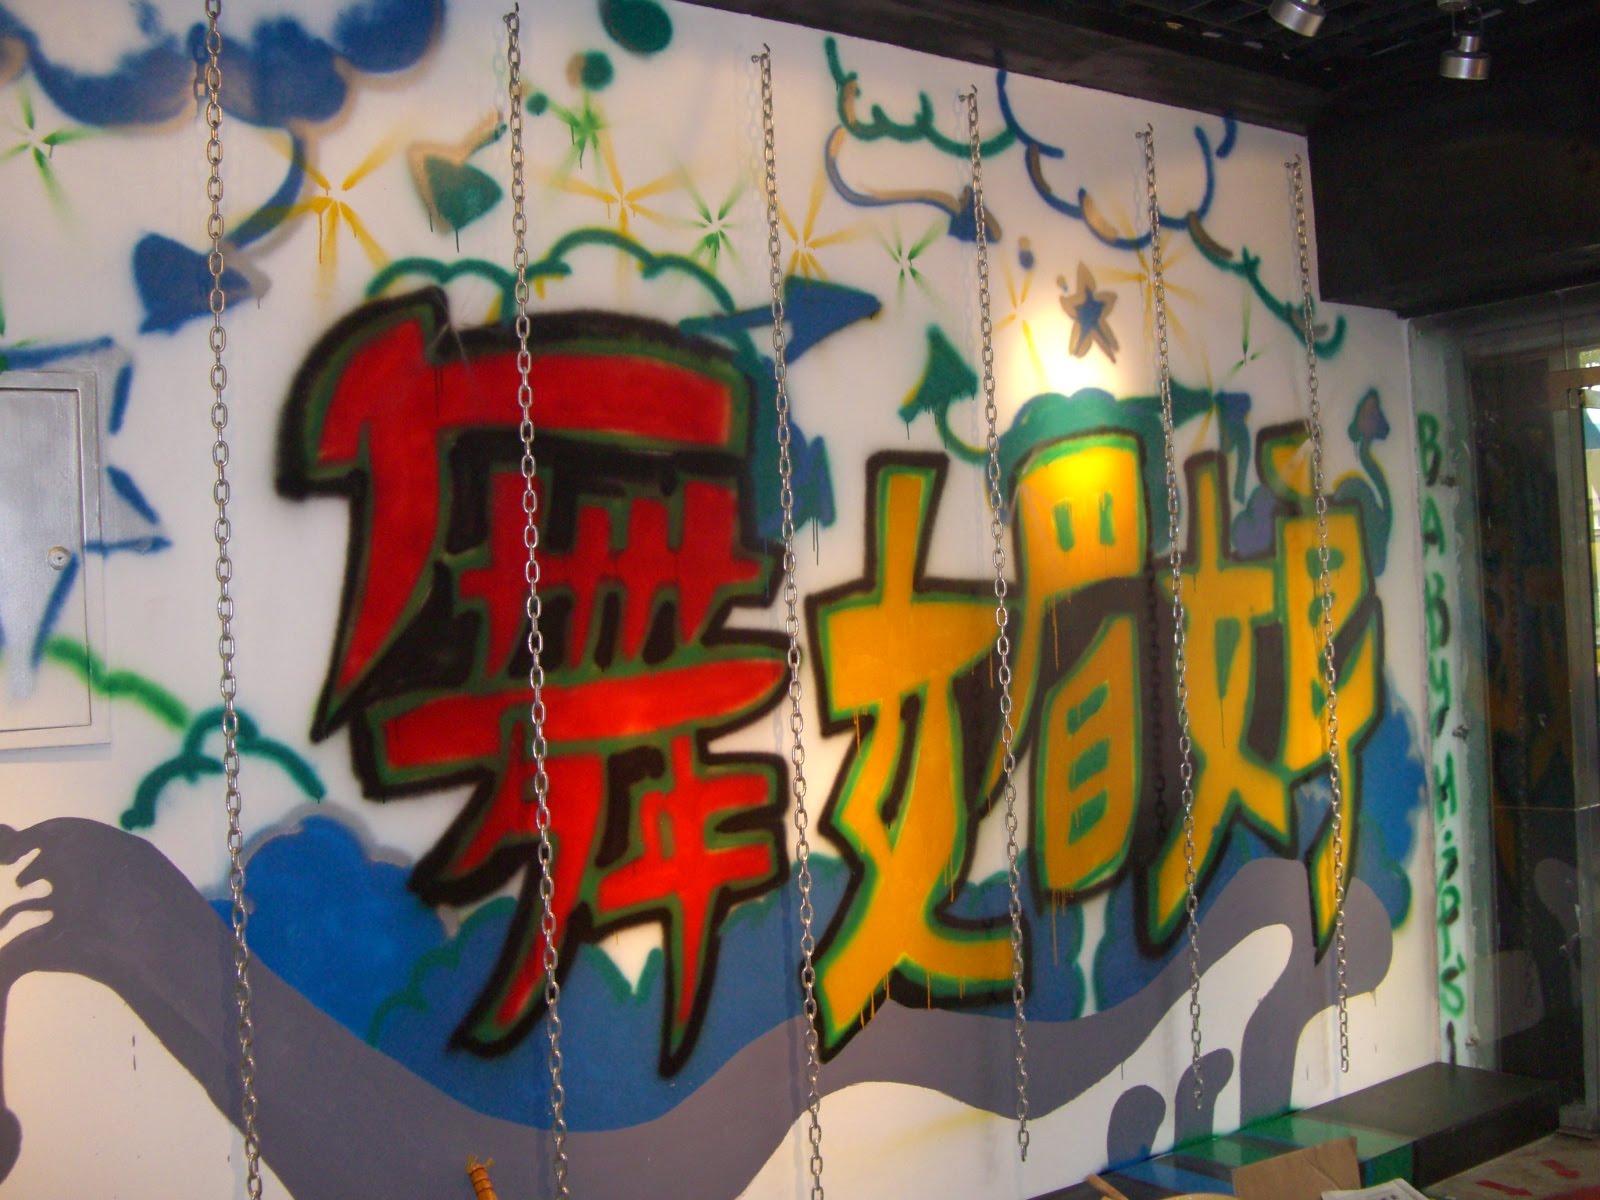 Chinese Graffiti Alphabet Letters On The Street Corner | Myblog's Blog